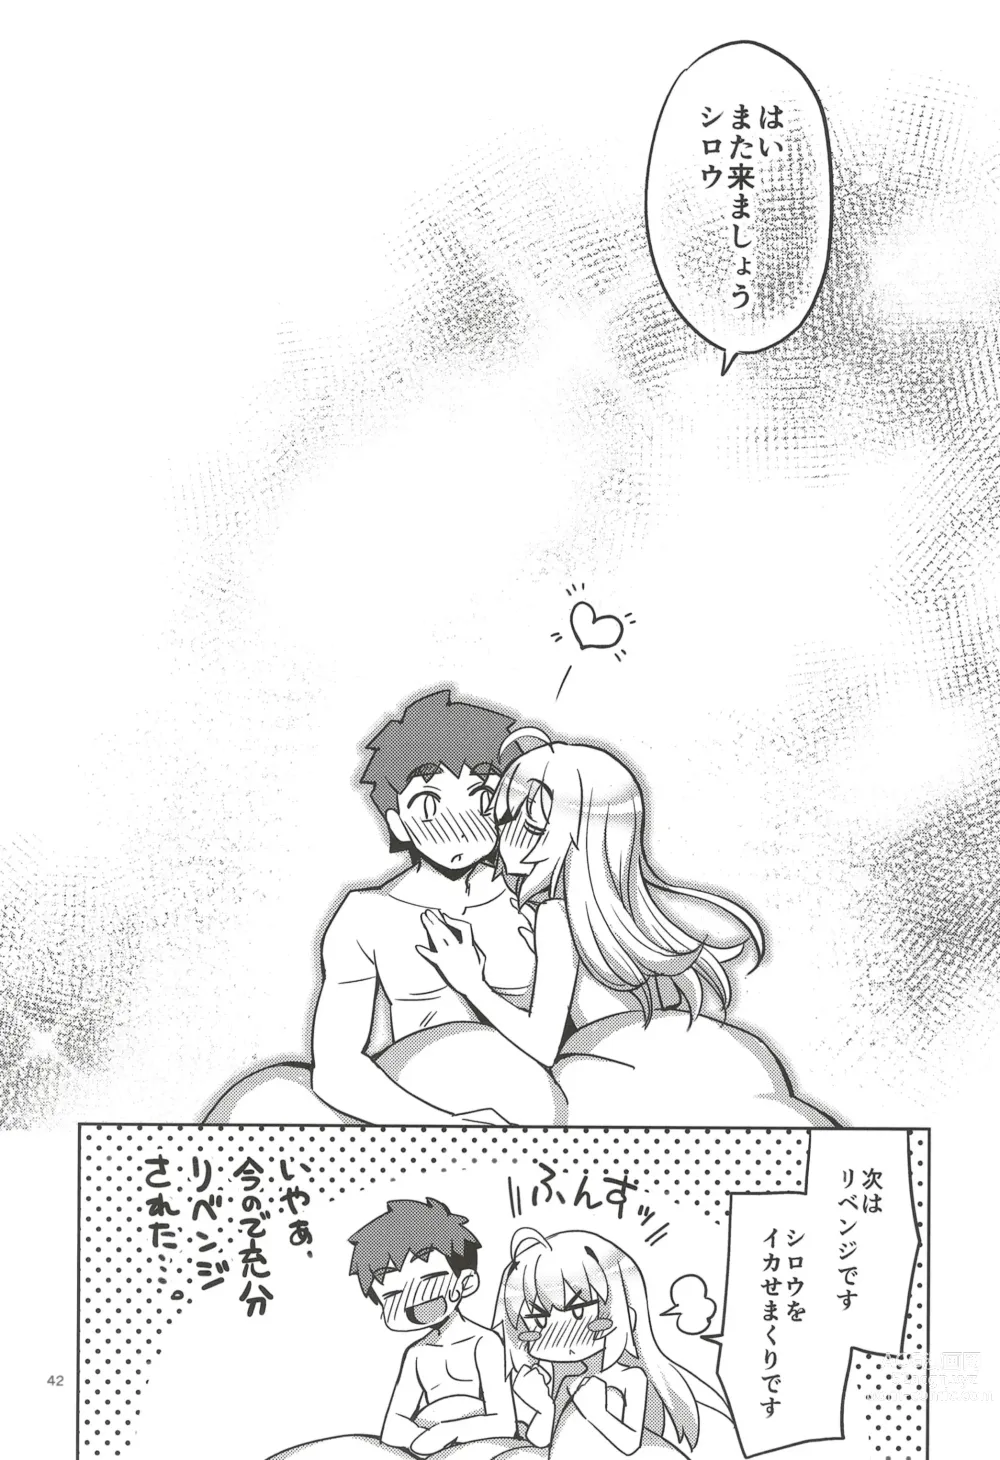 Page 42 of doujinshi RE32